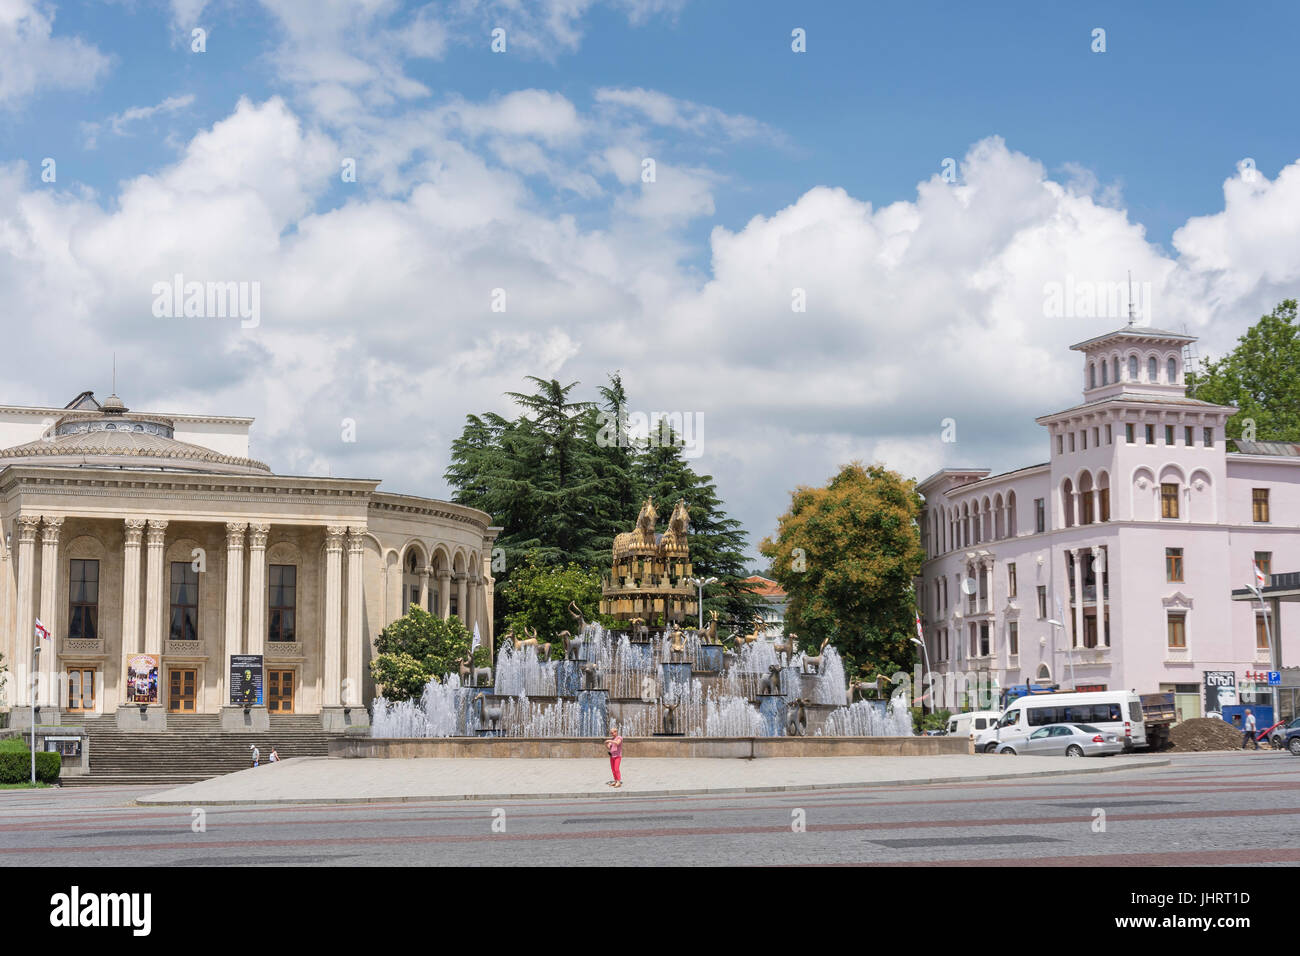 The Colchis Fountain and Lado Meskhishvili Theater in Central Square, Kutaisi, Imereti Province (Mkhare), Georgia Stock Photo